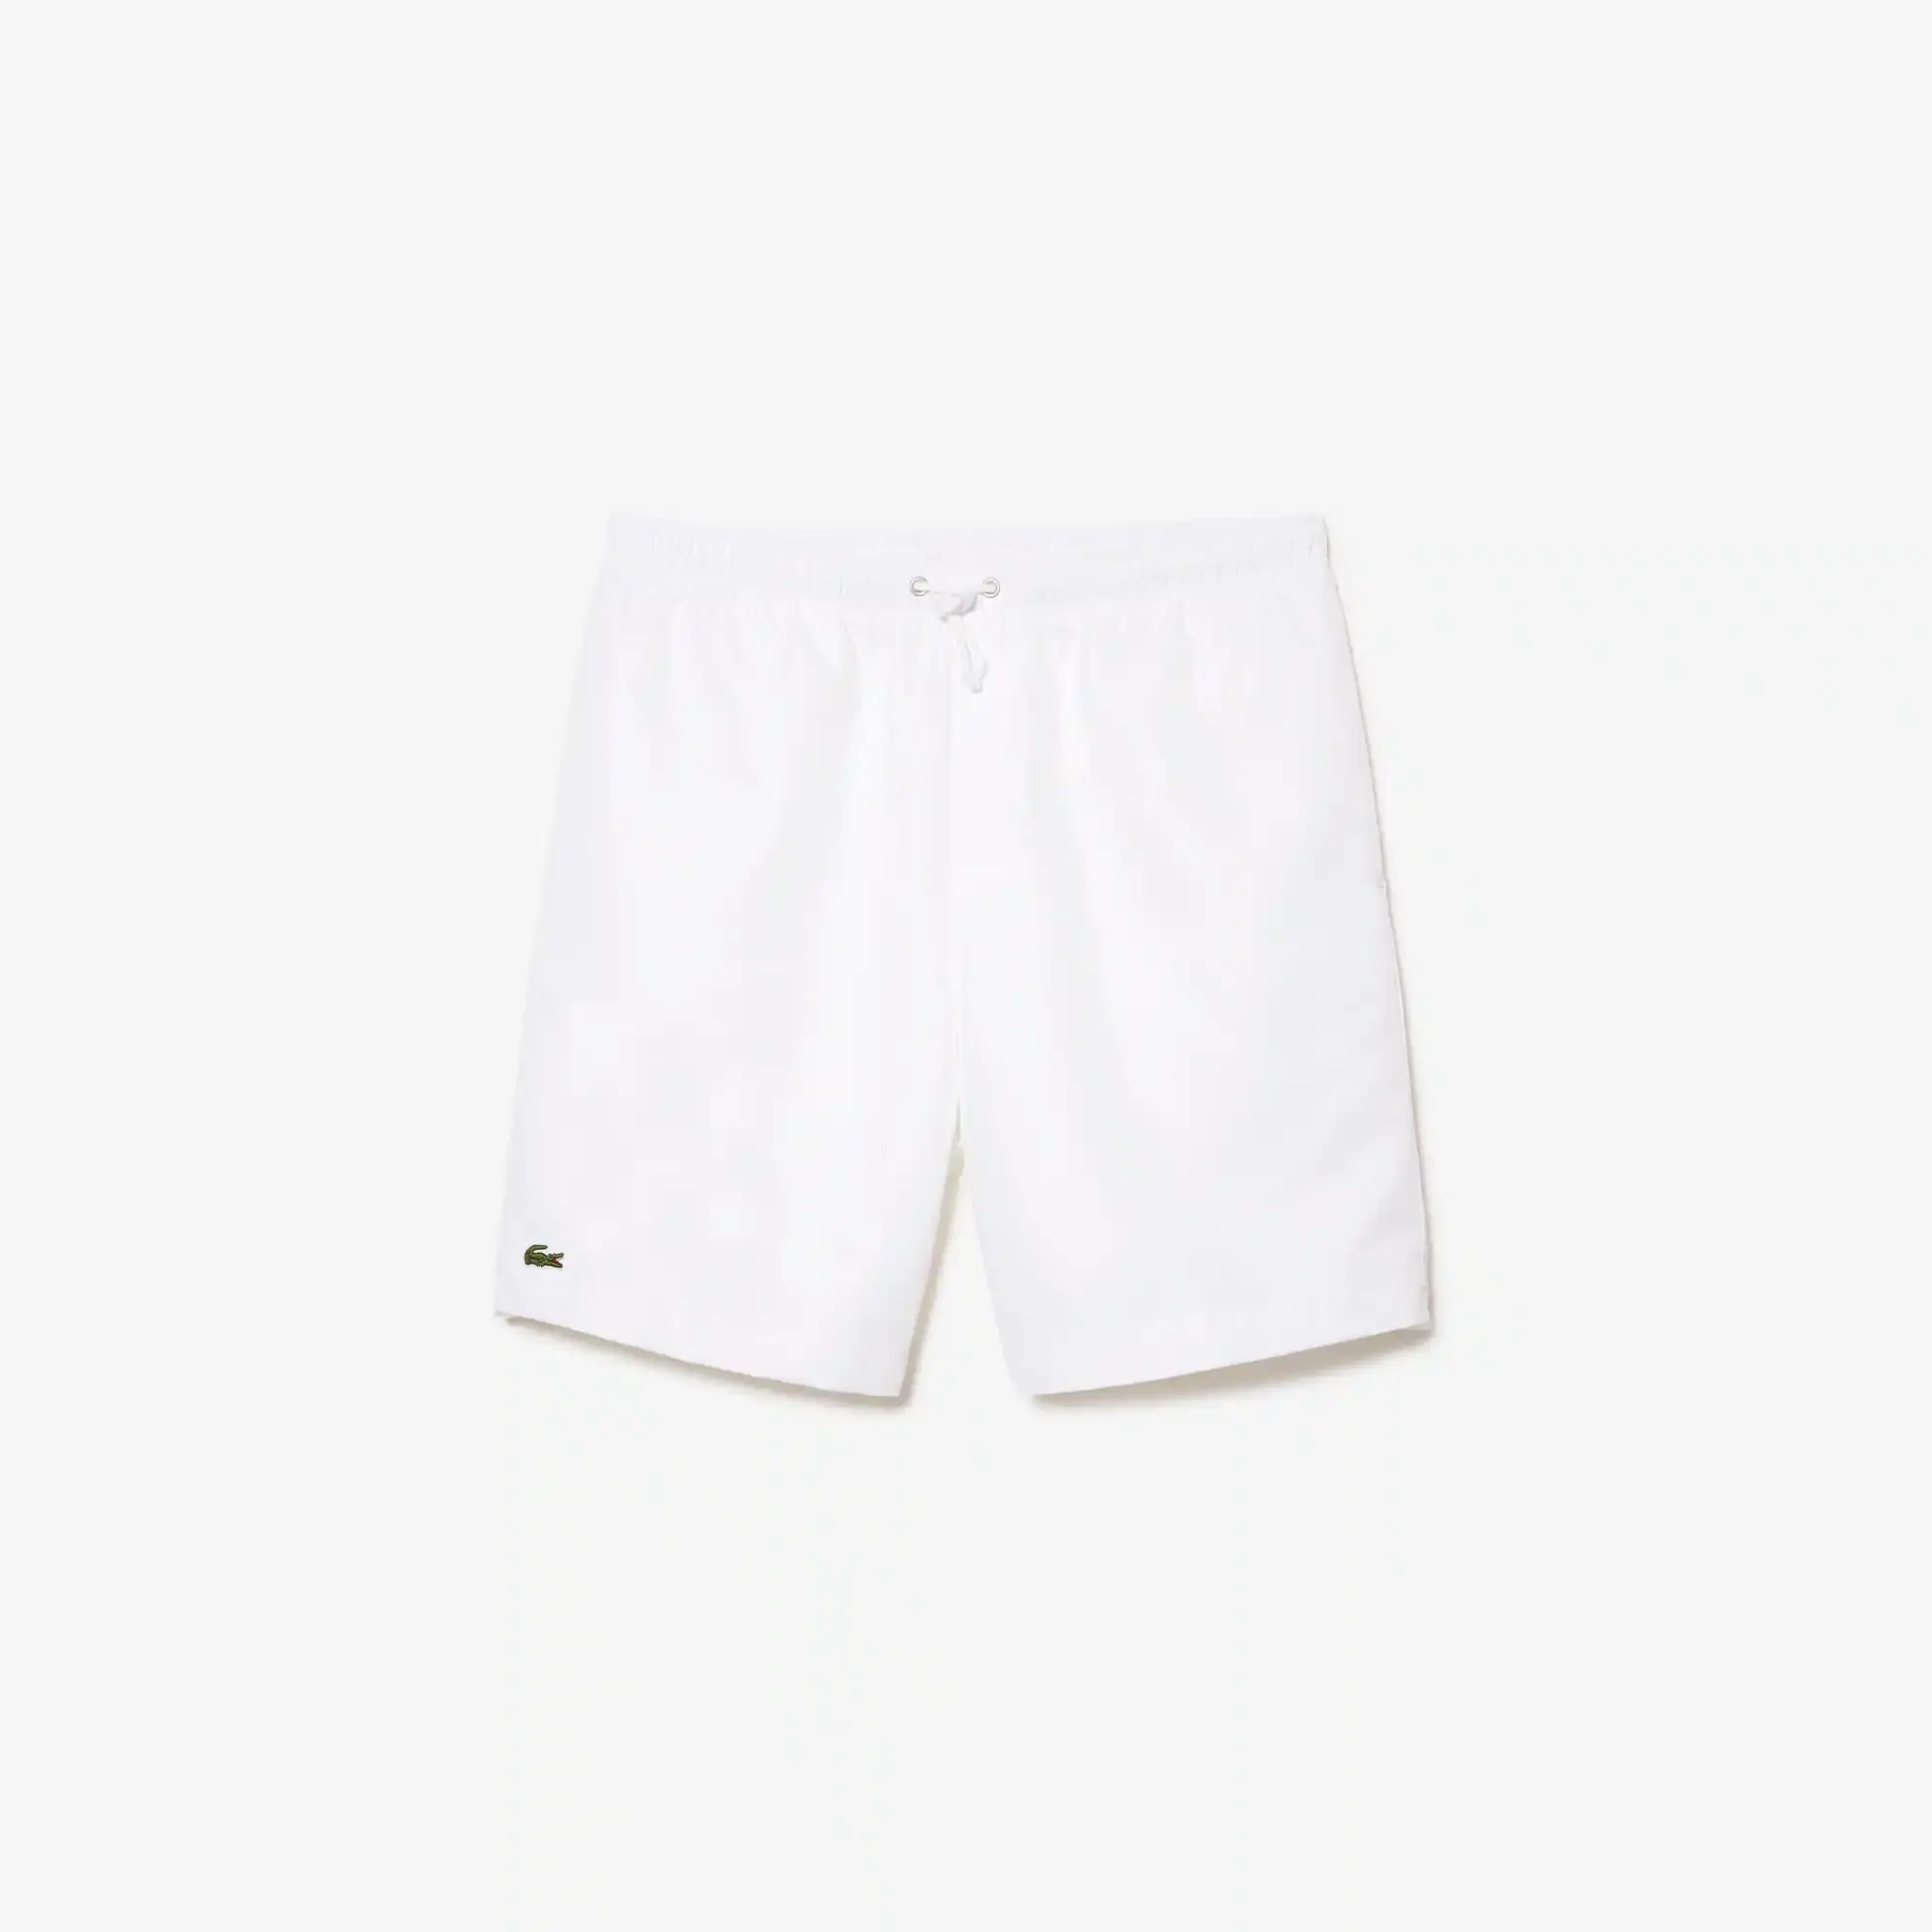 Lacoste Men's SPORT Tennis Solid Diamond Weave Shorts. 2